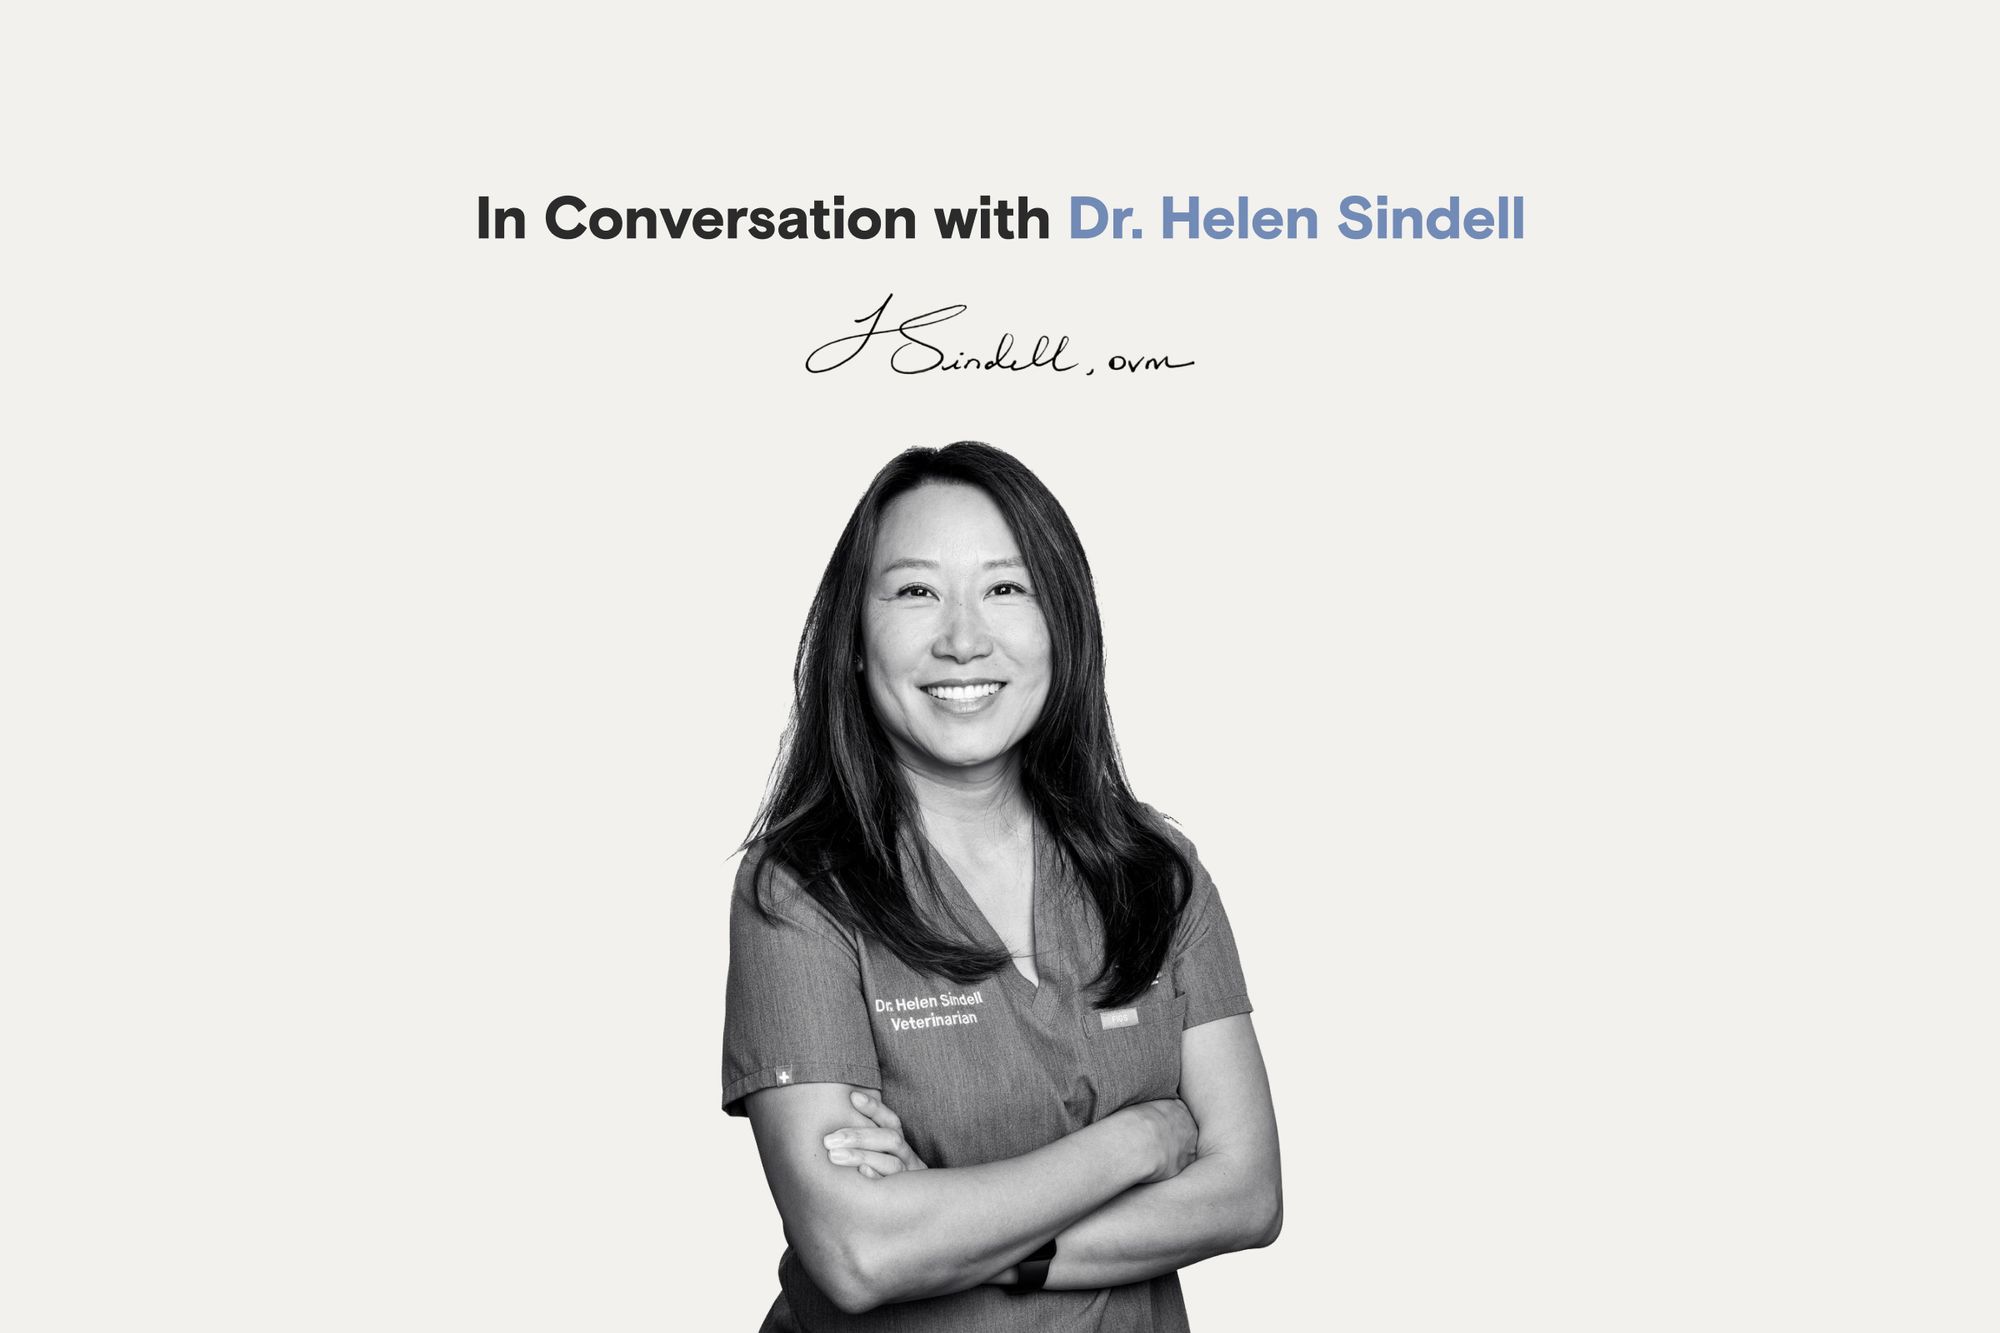 In Conversation with Dr. Helen Sindell